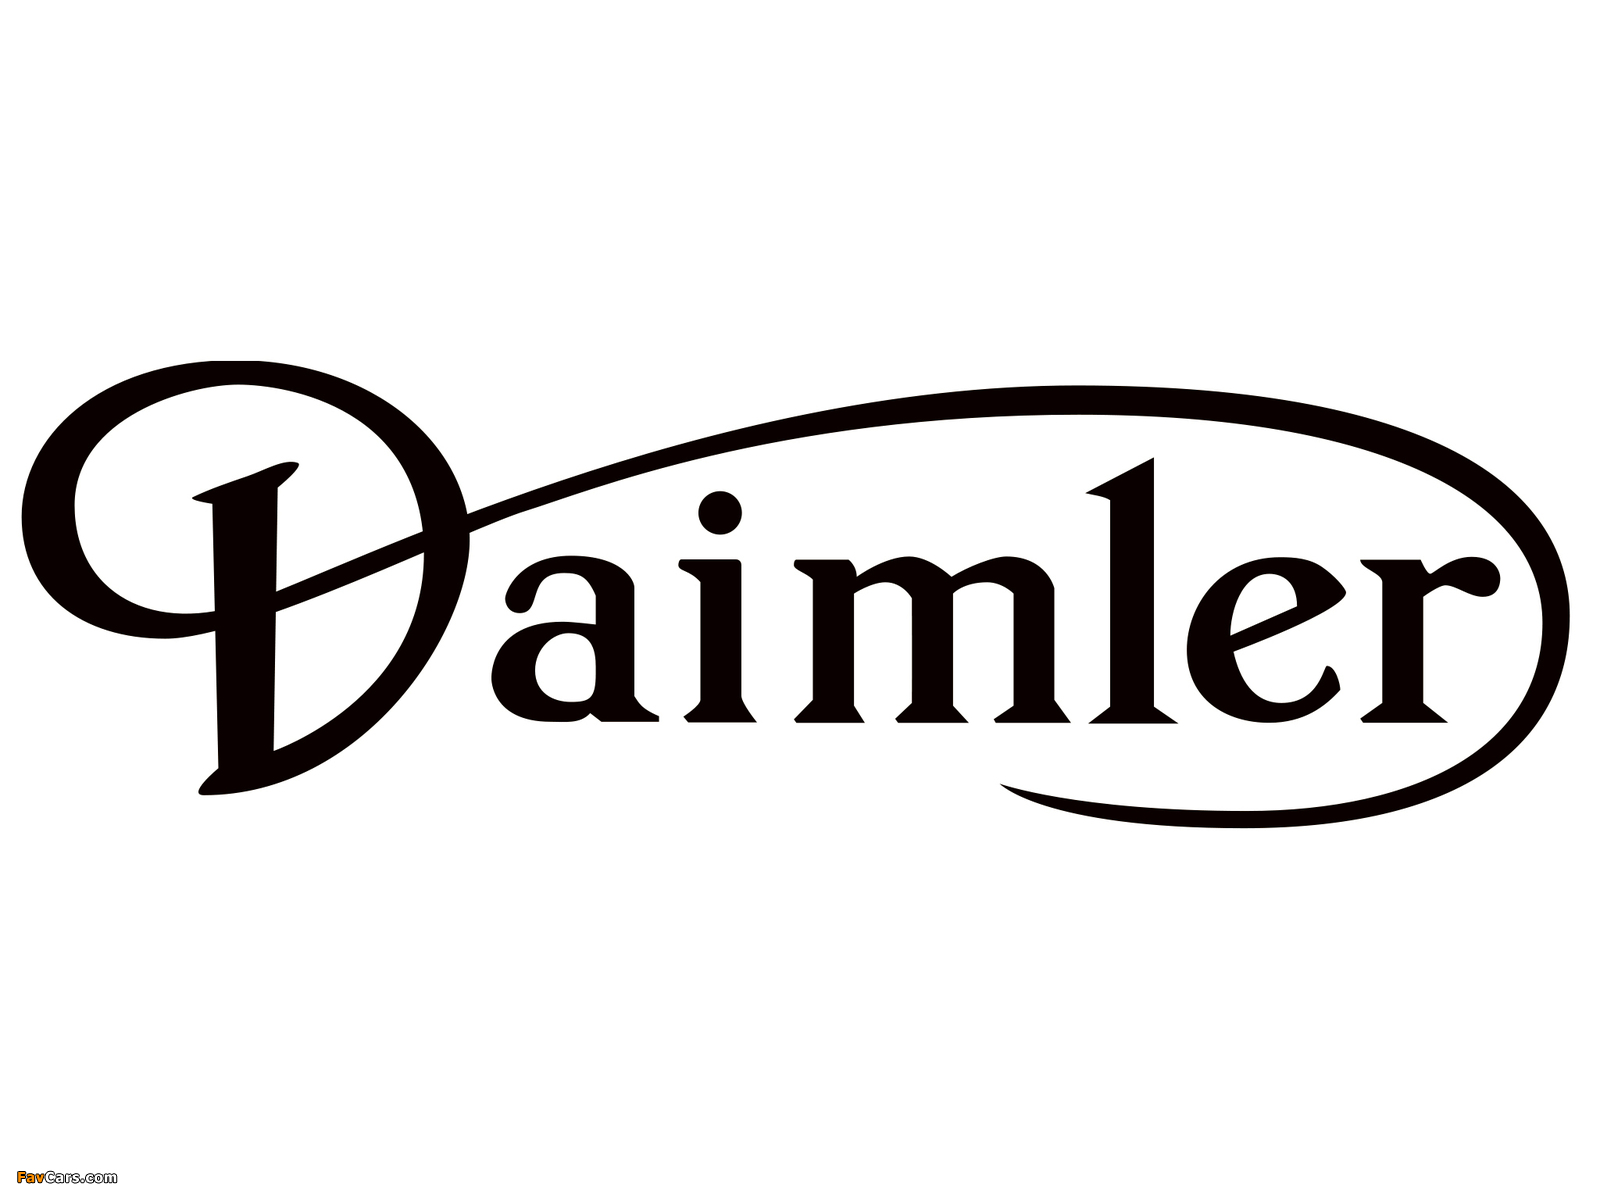 Daimler wallpapers (1600 x 1200)